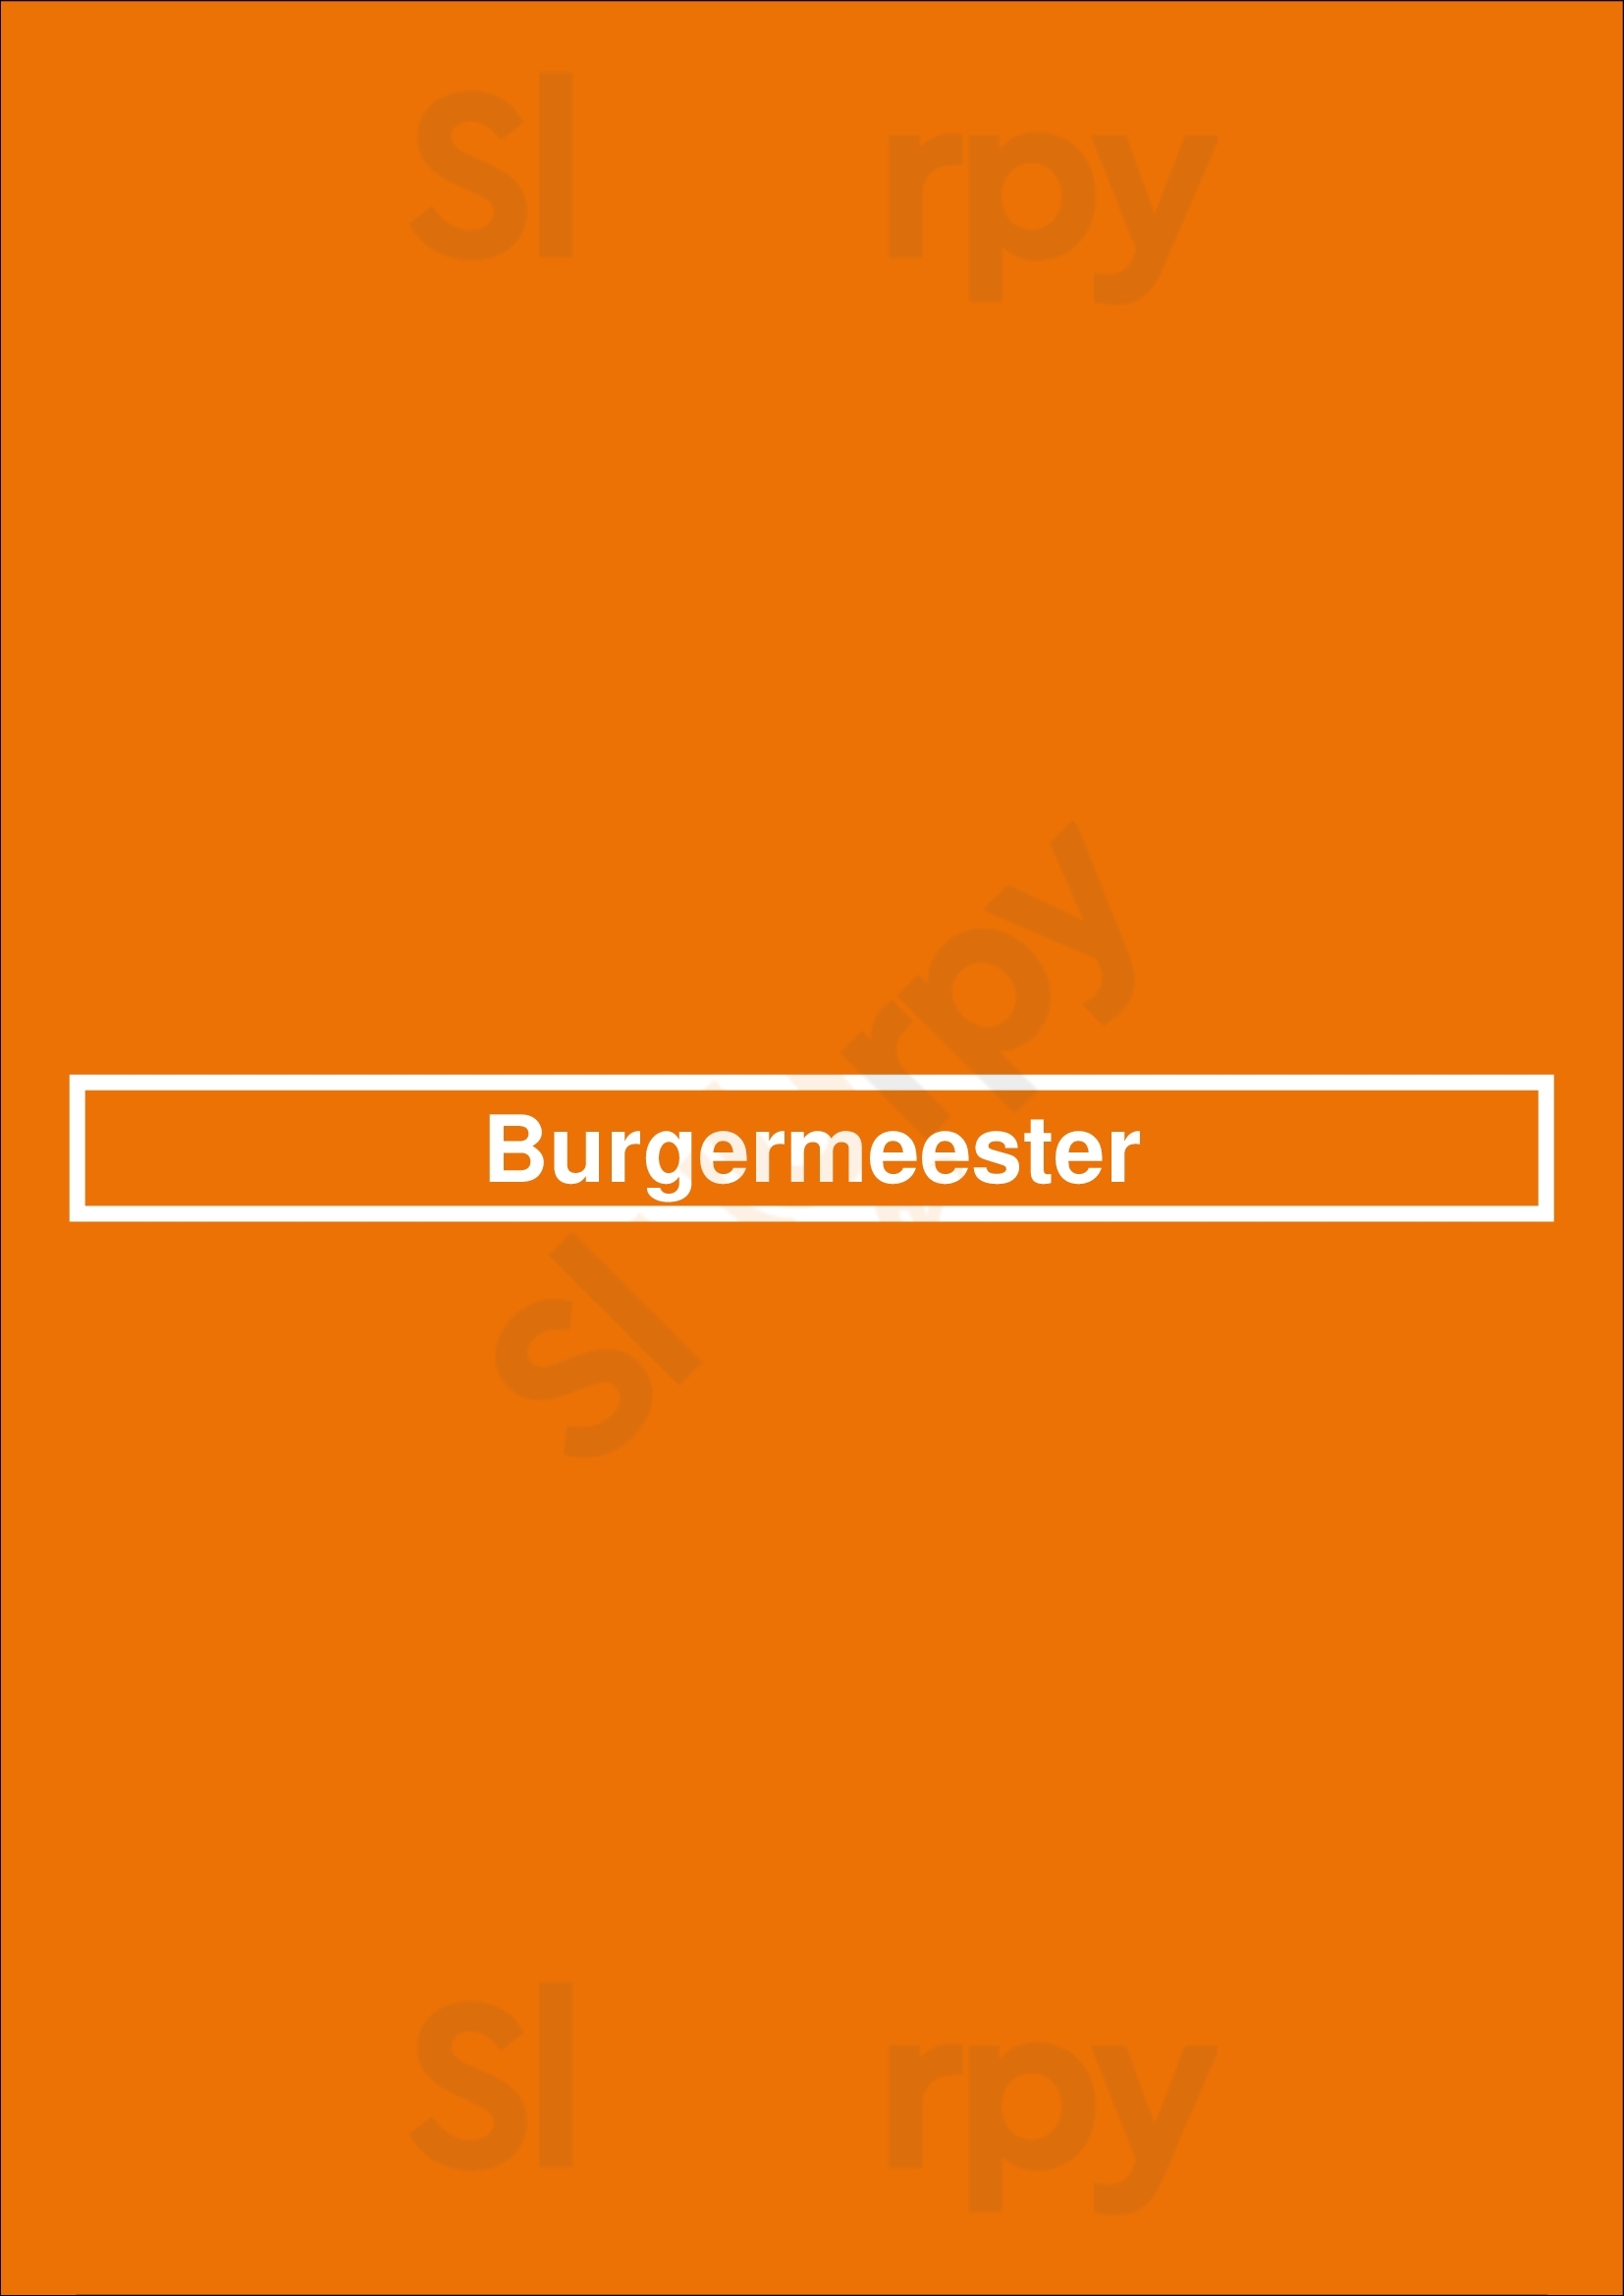 Burgermeester Amsterdam Menu - 1